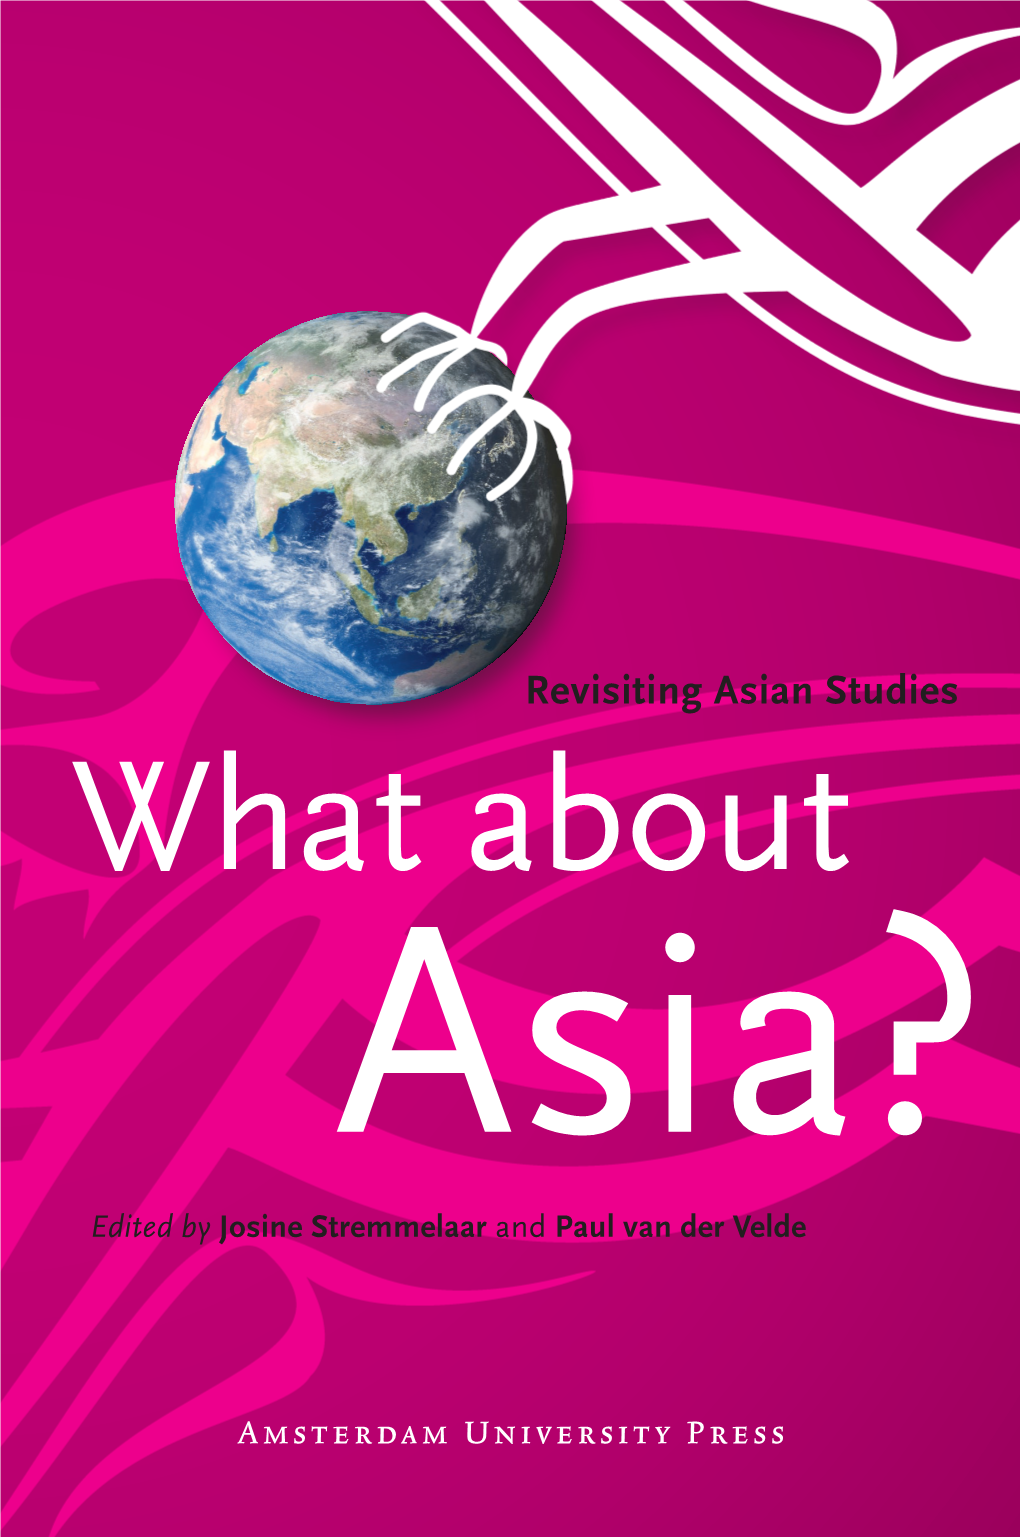 Revisiting Asian Studies